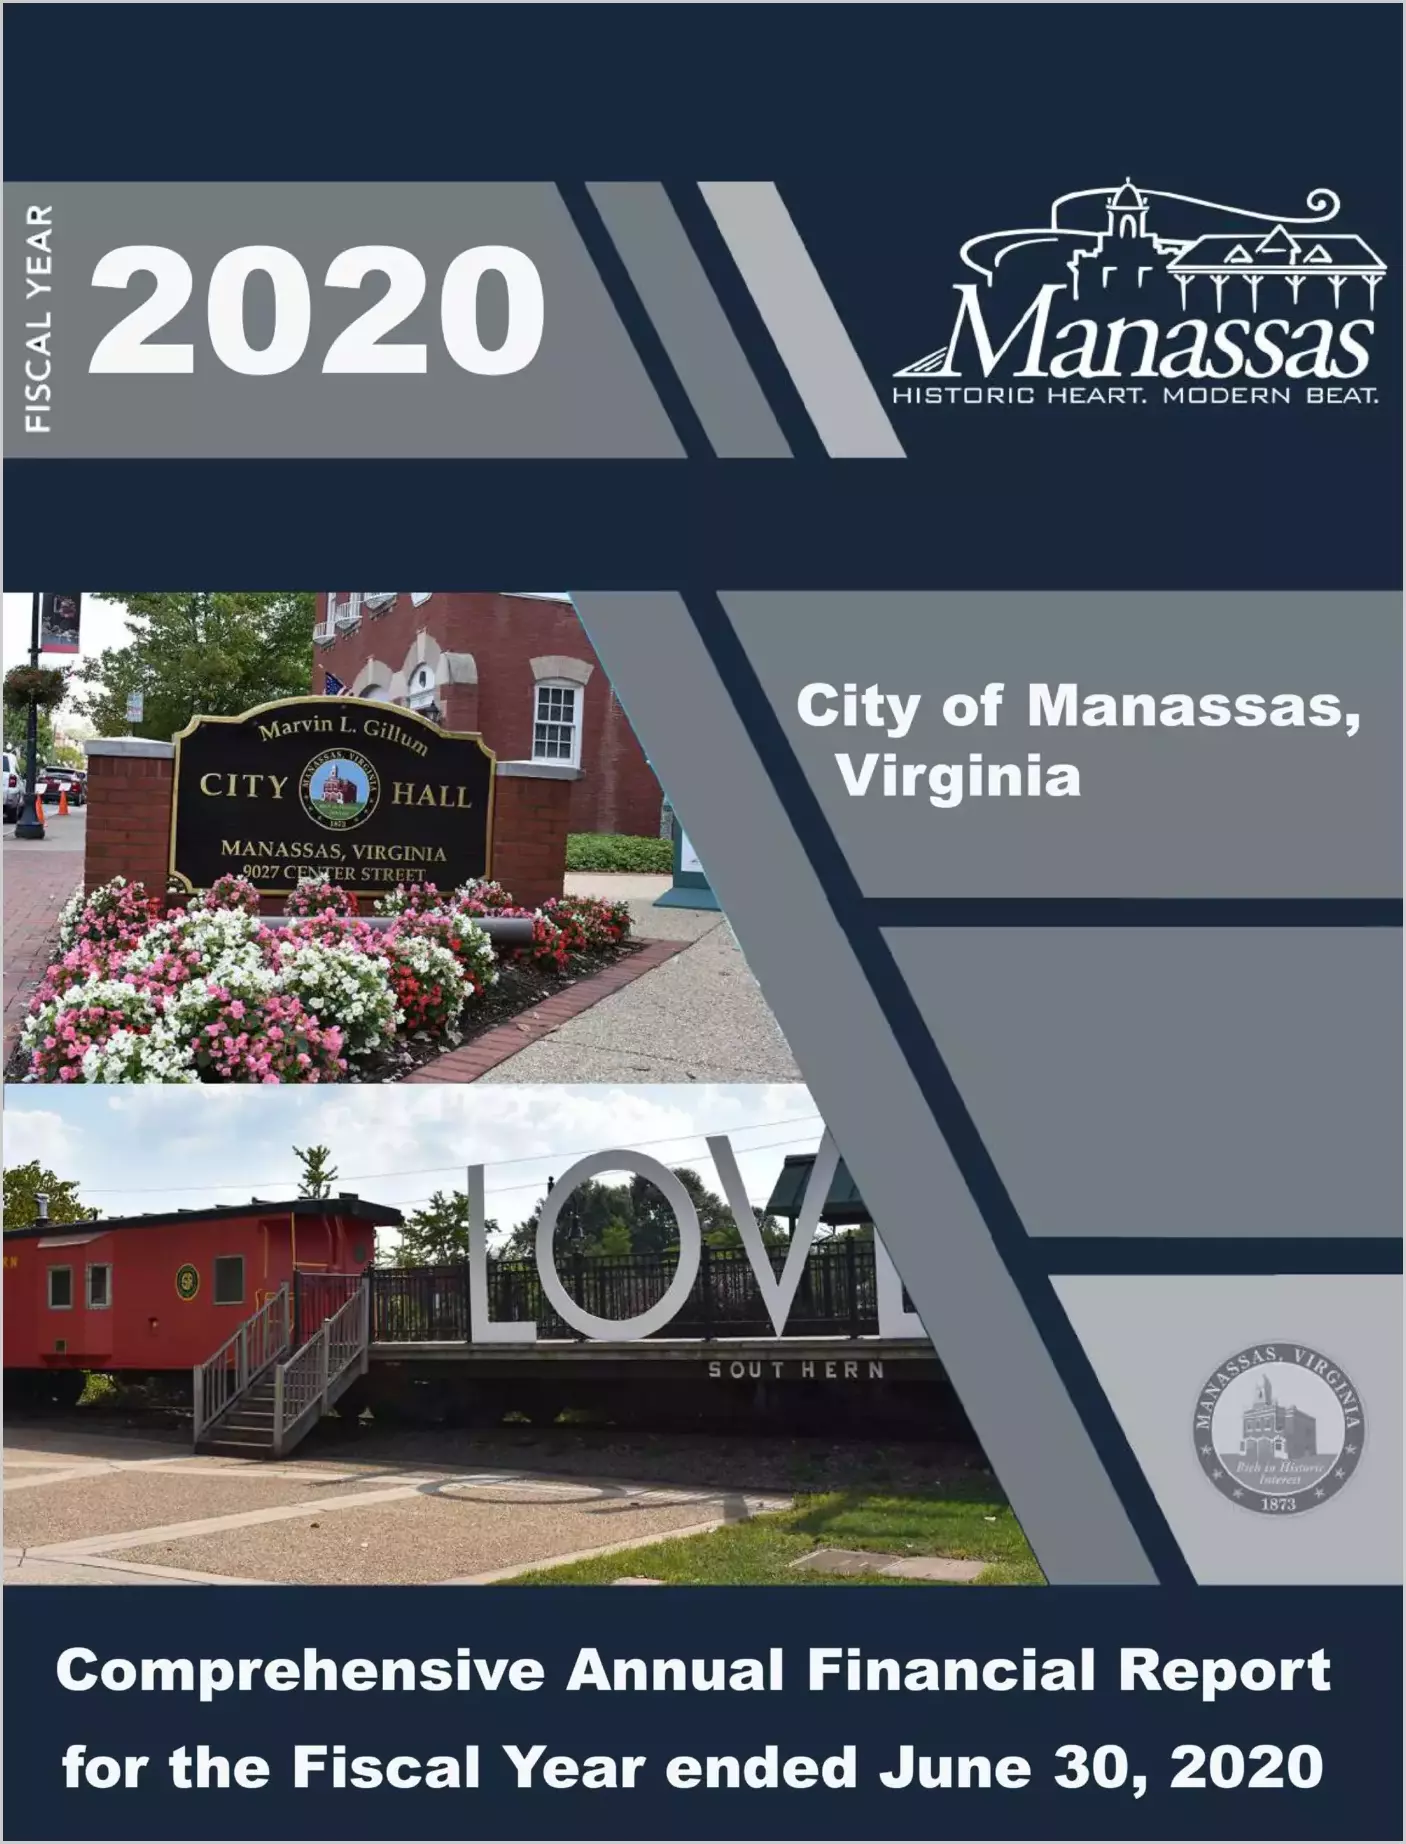 2020 Annual Financial Report for City of Manassas